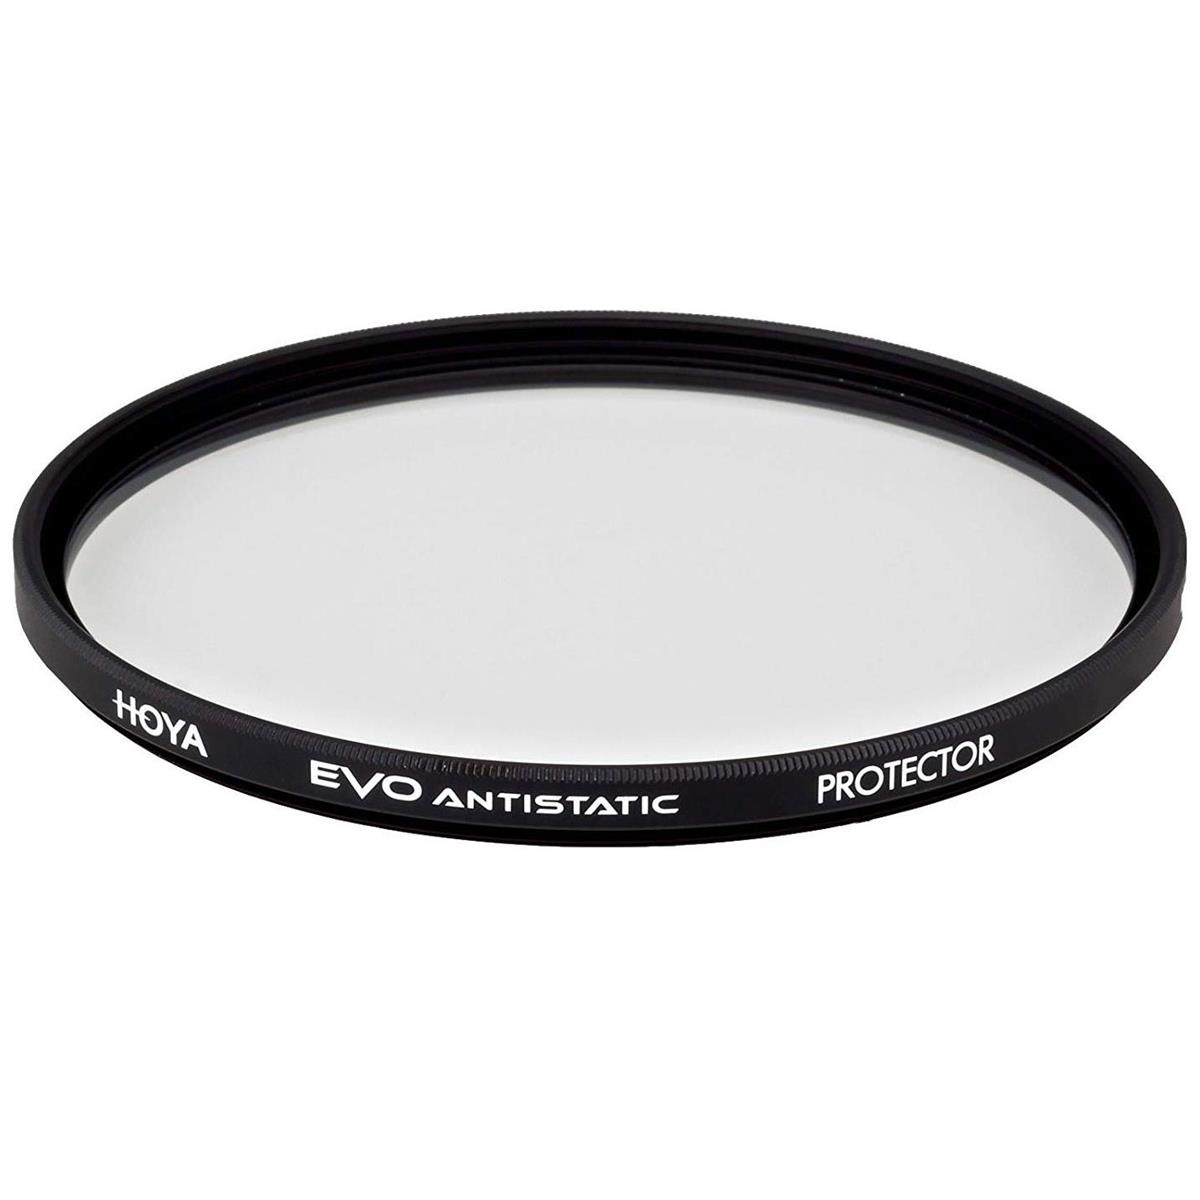 Hoya Evo Antistatic Protector Filter - 43mm